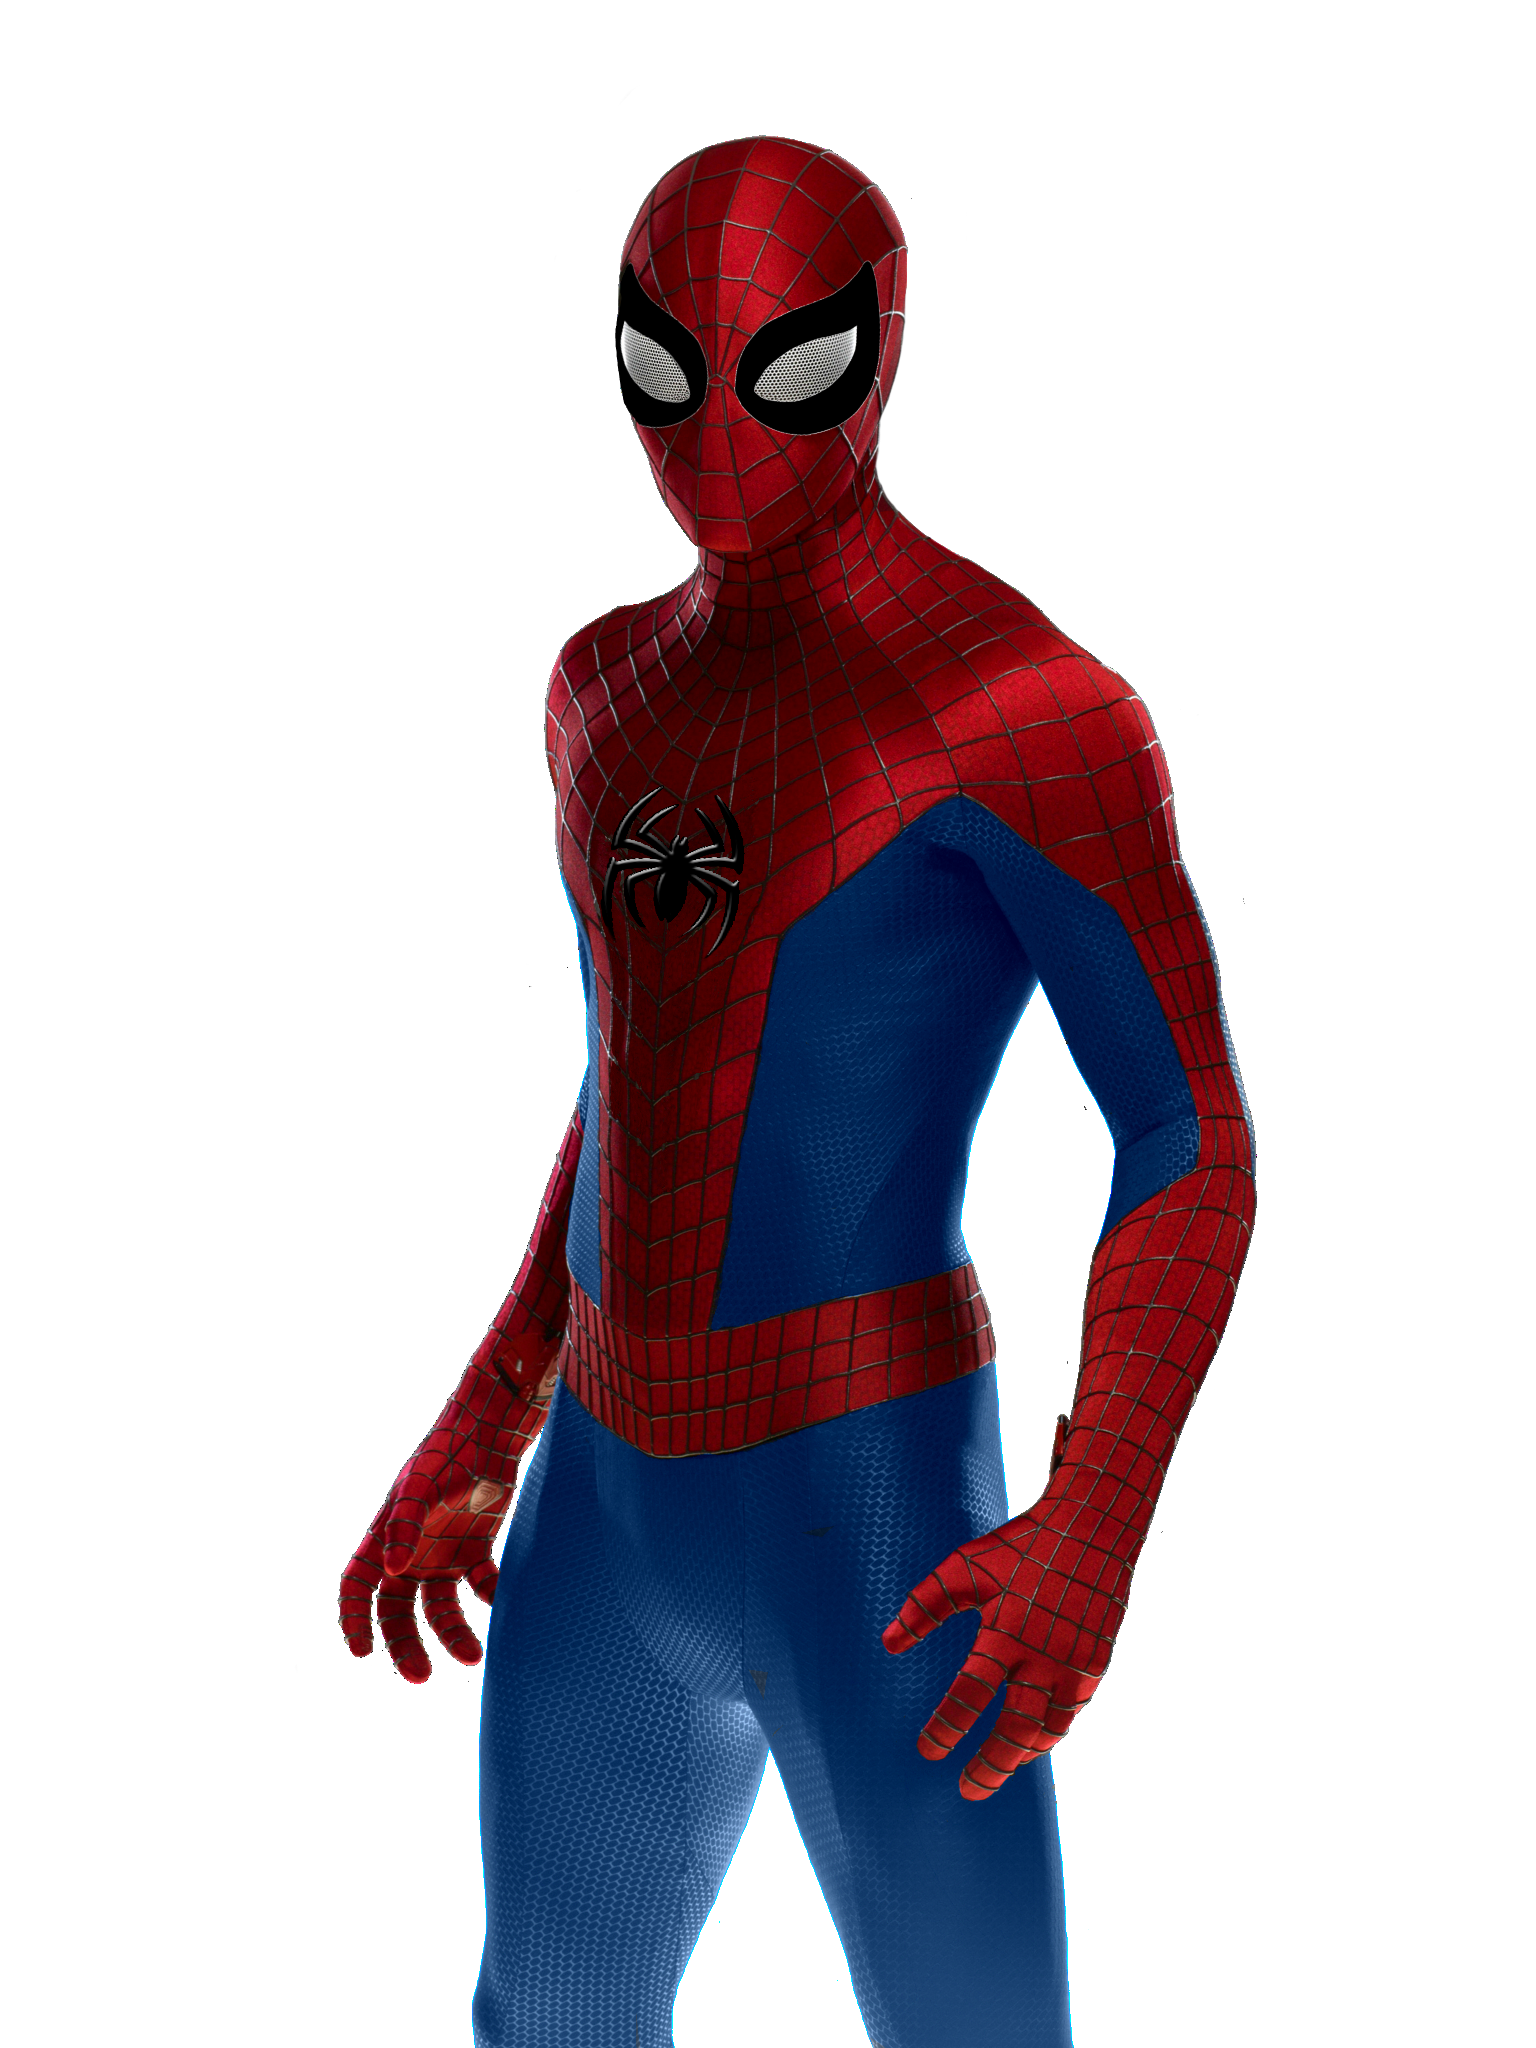 Spider-Man PNG images free download